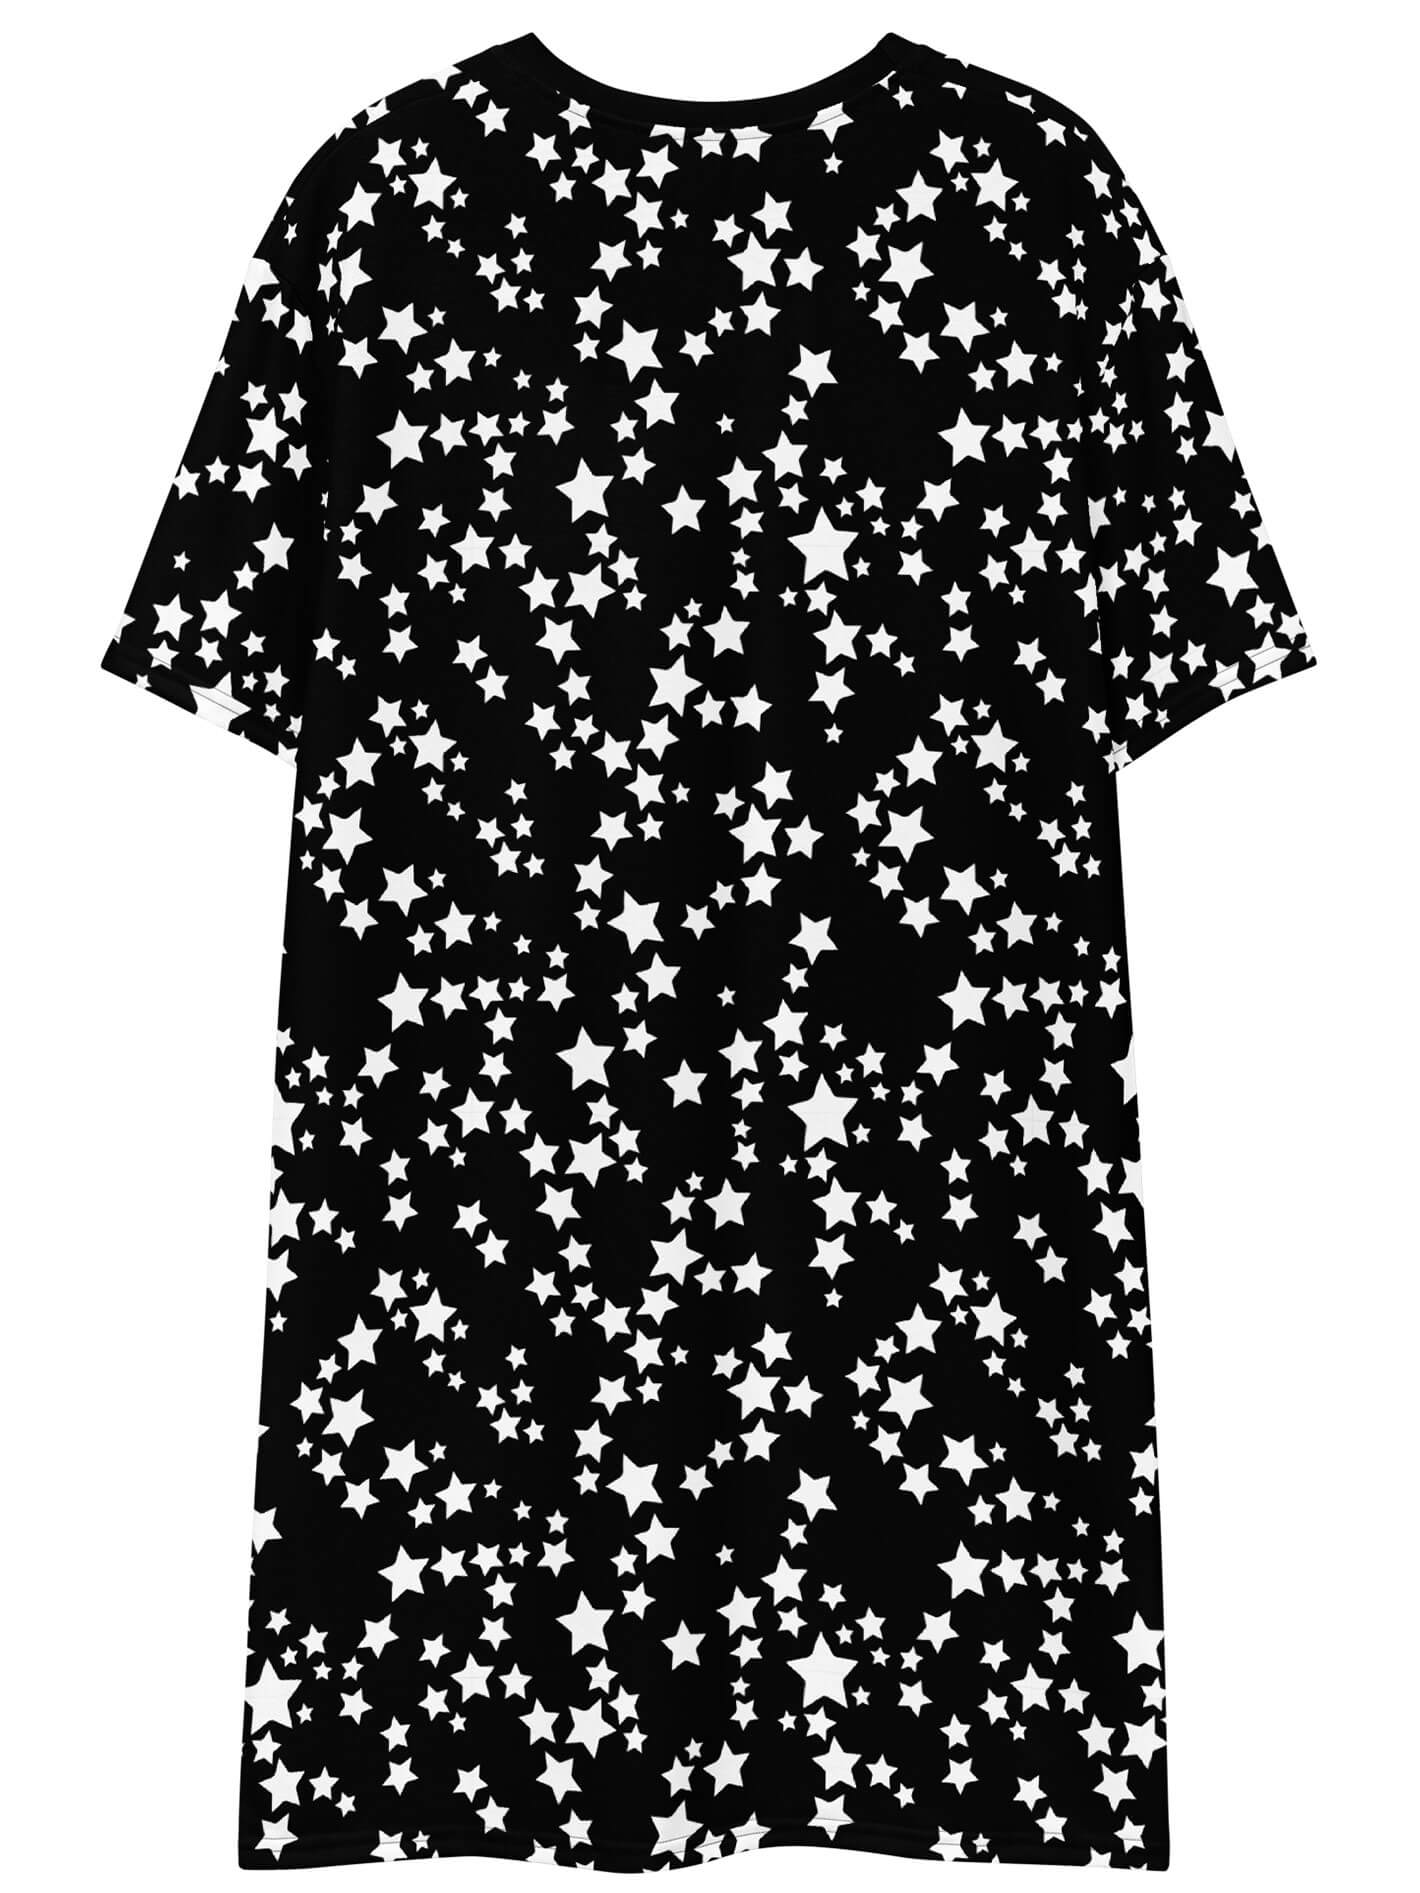 Black and white star print plus size dress.